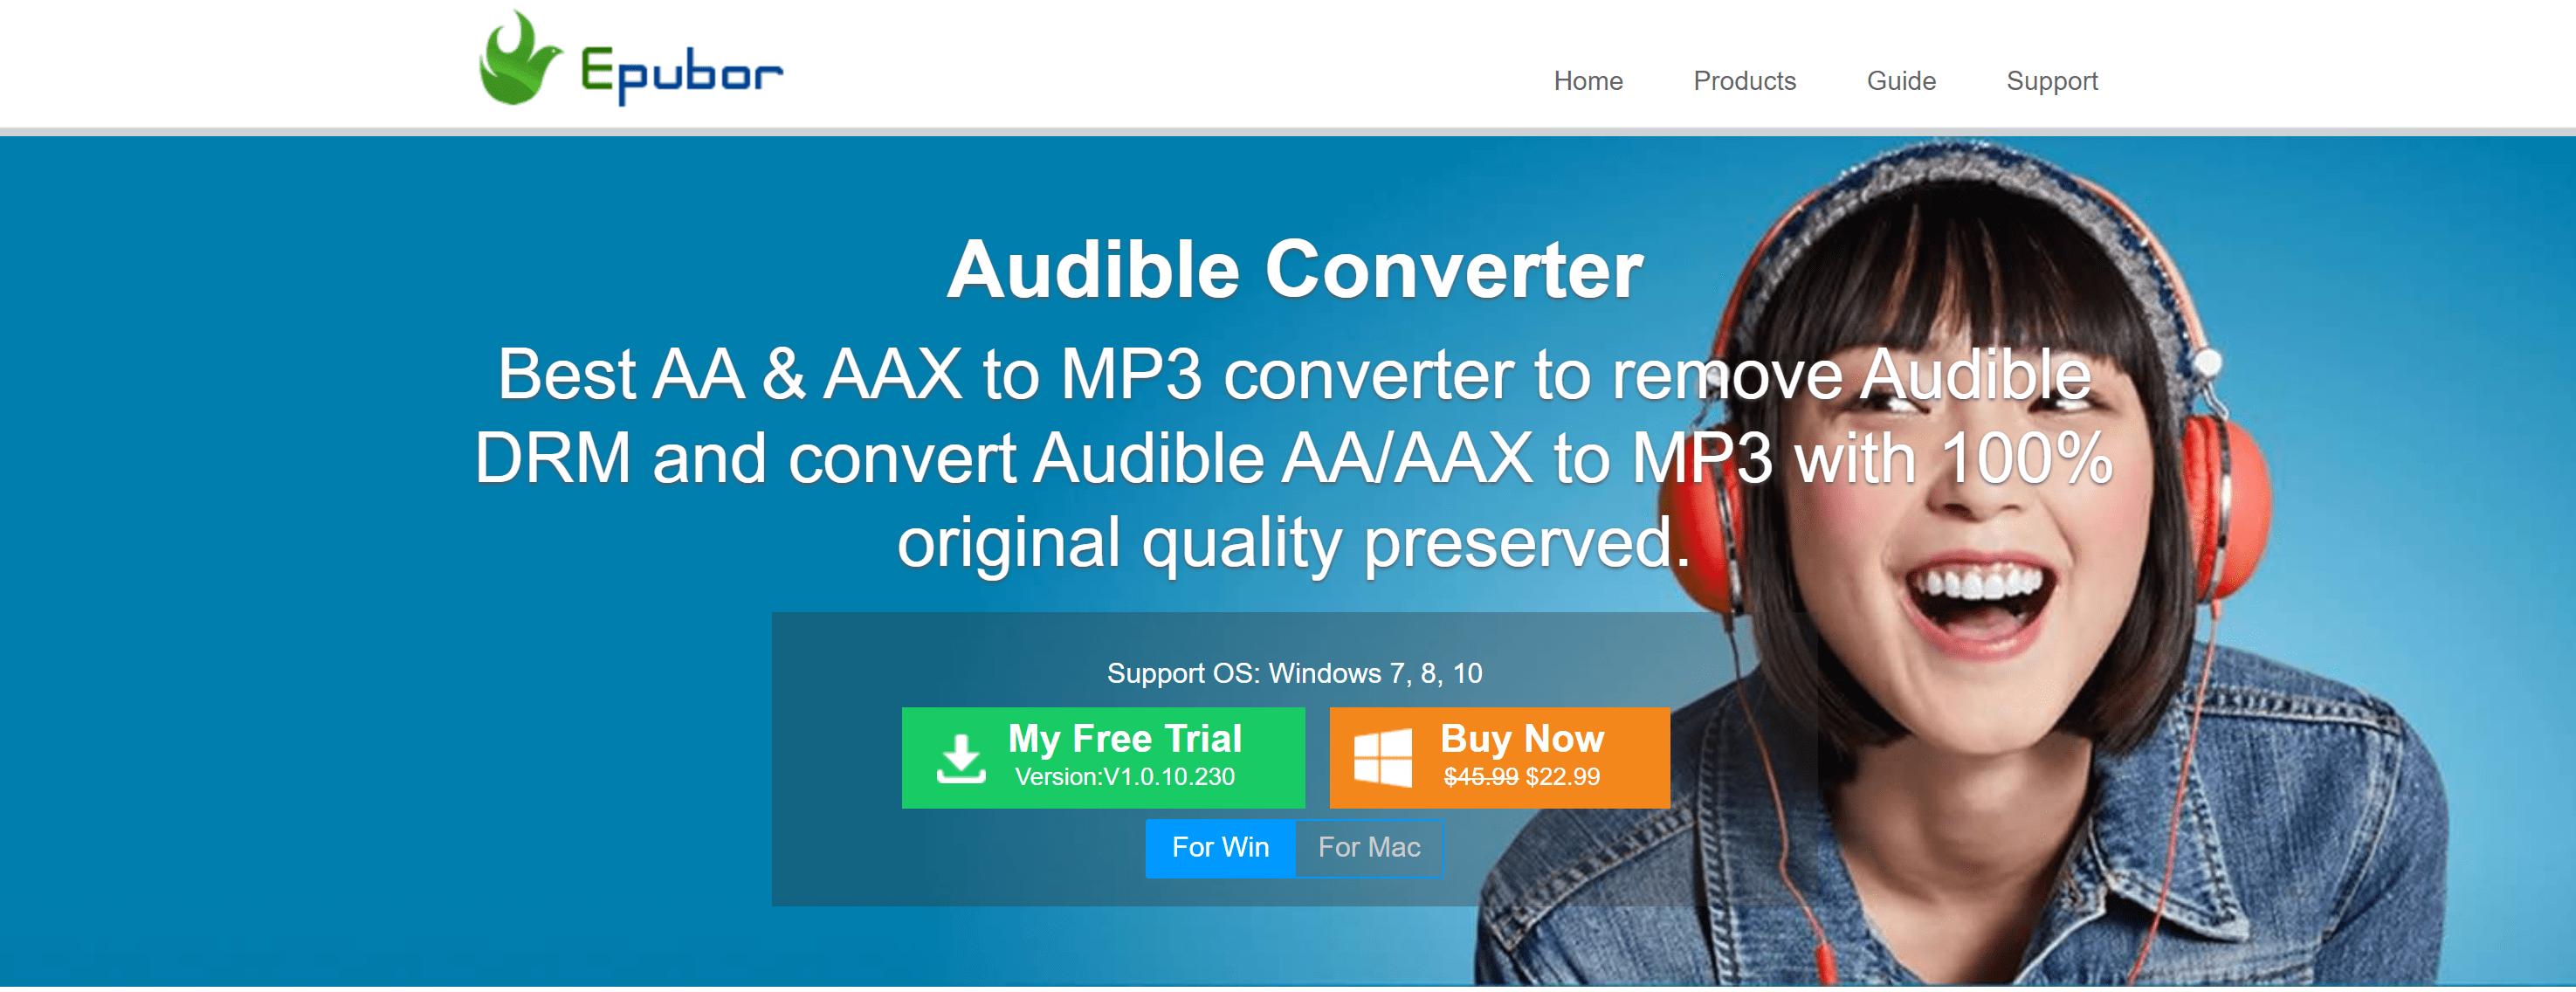 epubor audible converter discount